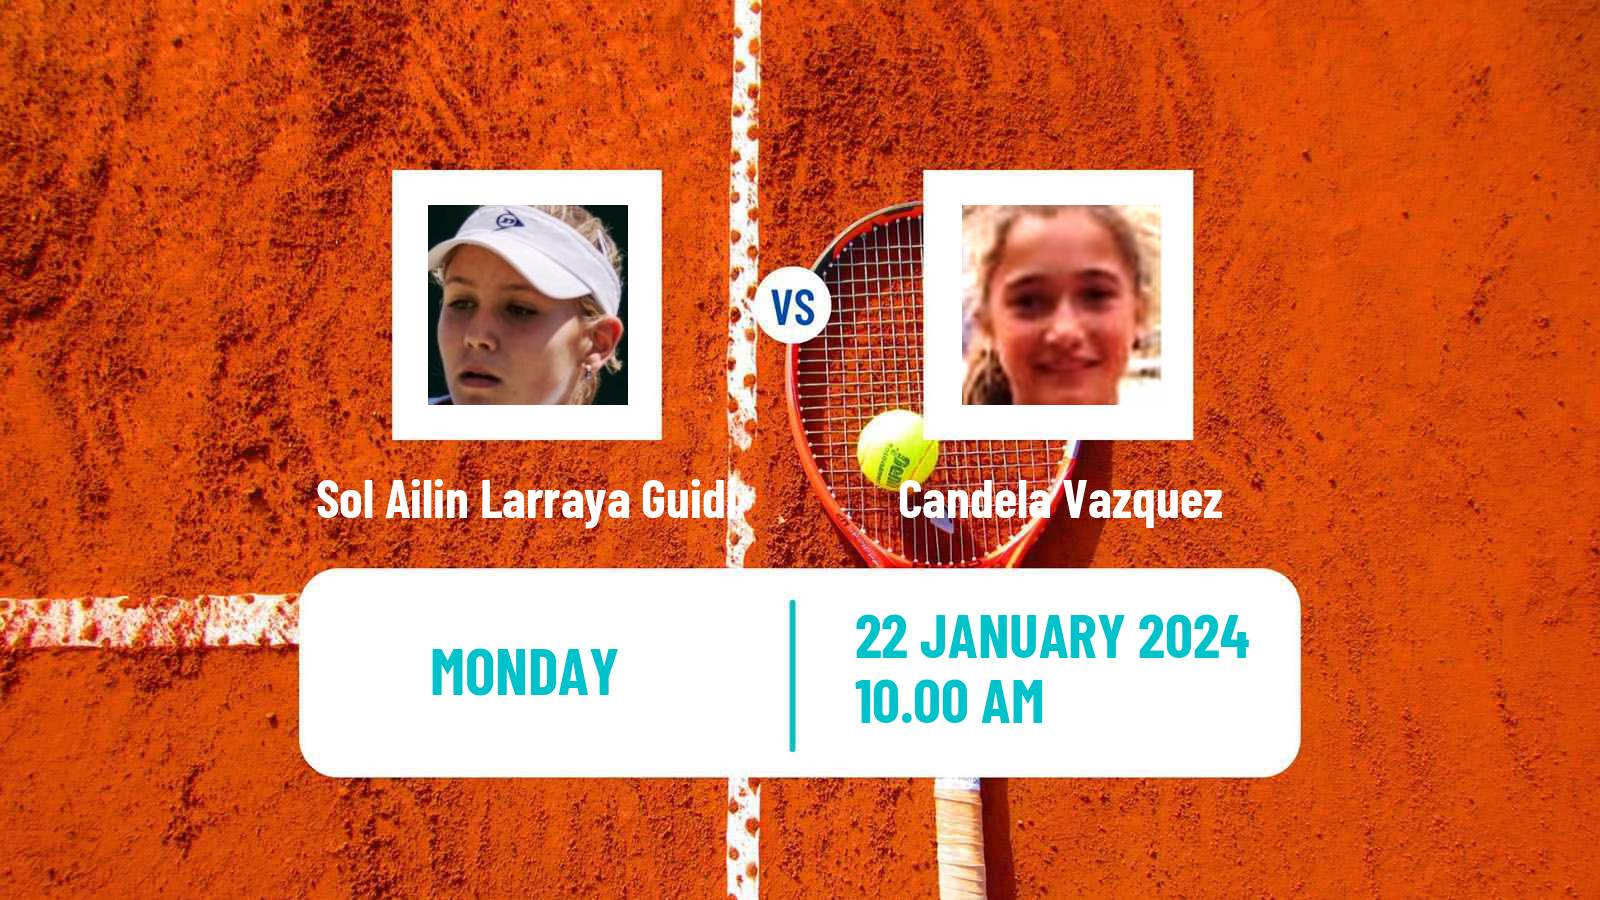 Tennis ITF W35 Buenos Aires 2 Women Sol Ailin Larraya Guidi - Candela Vazquez